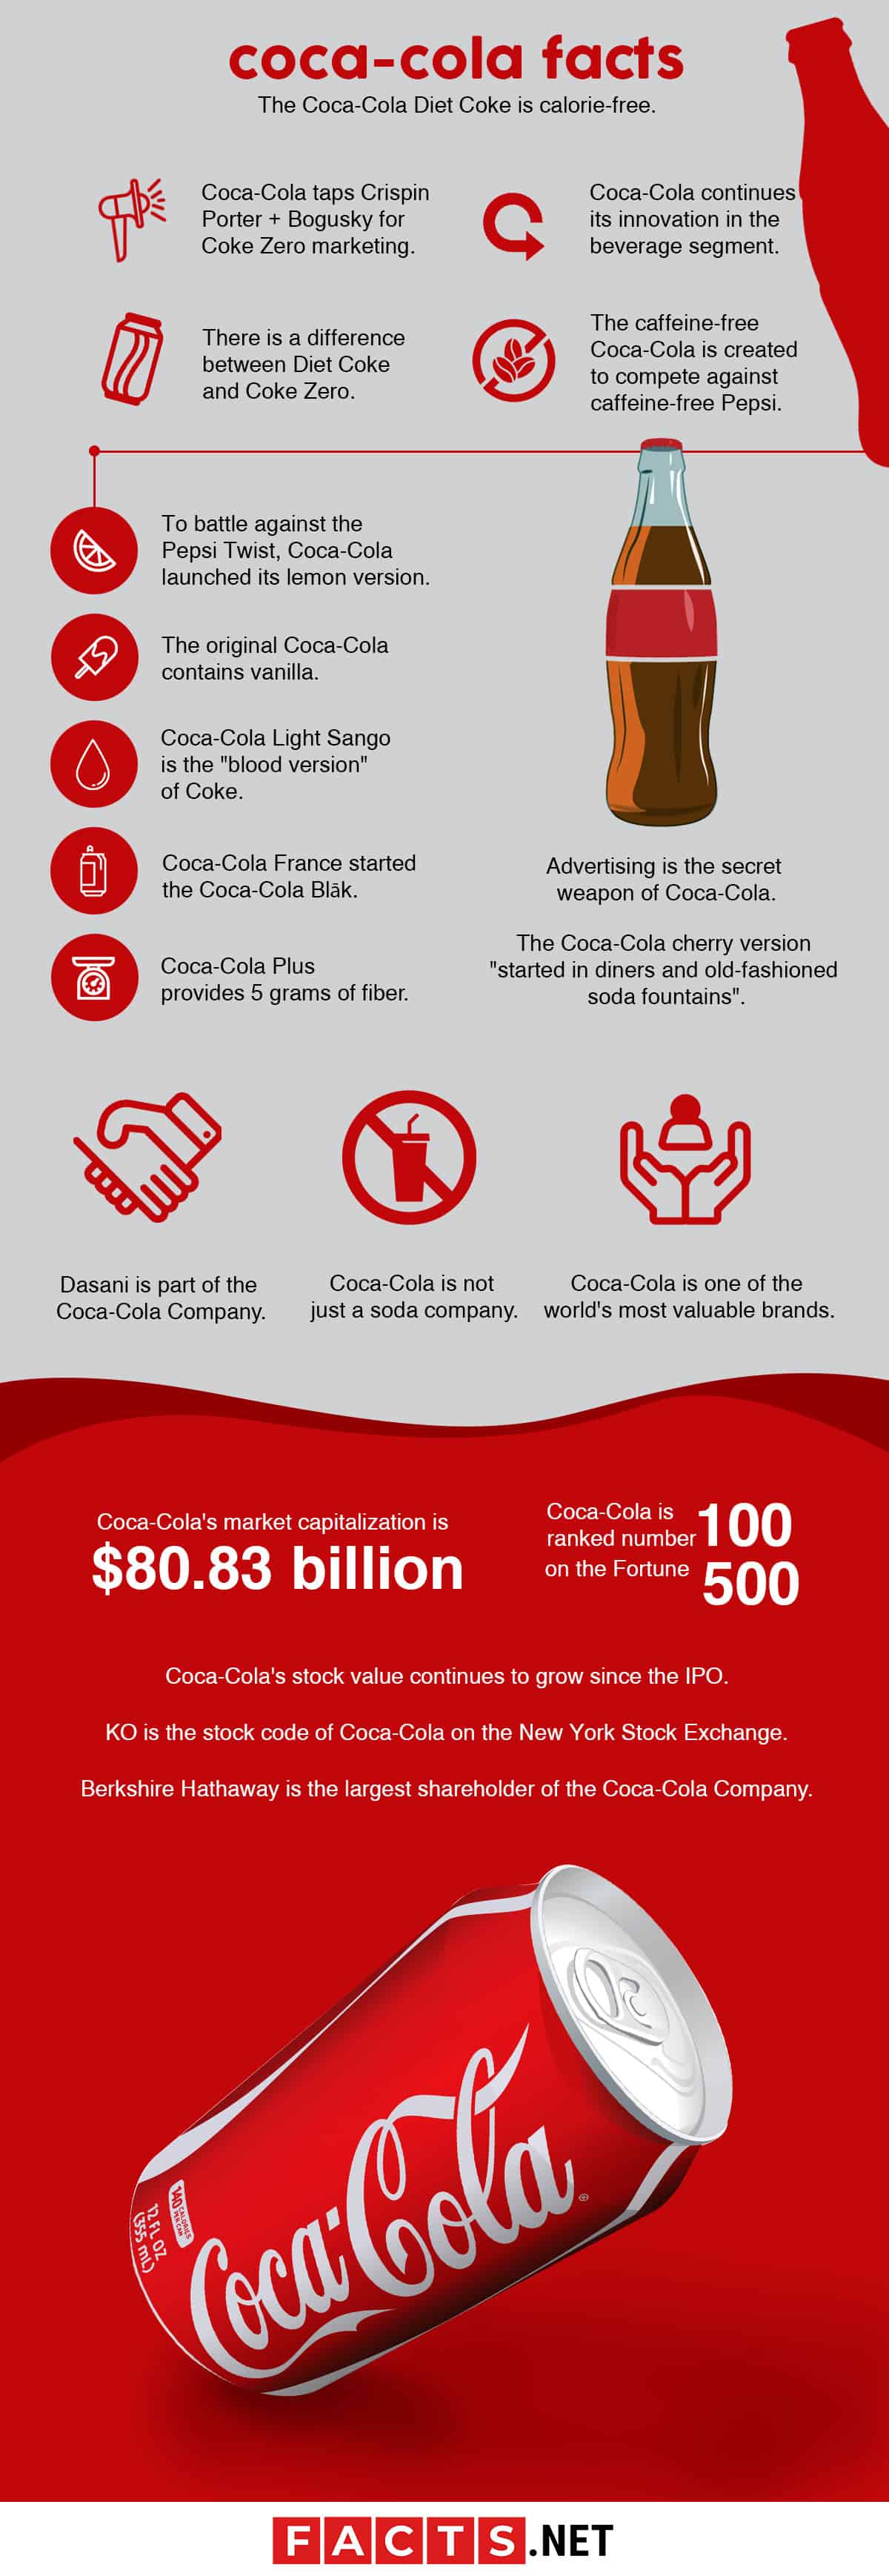 5 important jobs facts of coca-cola